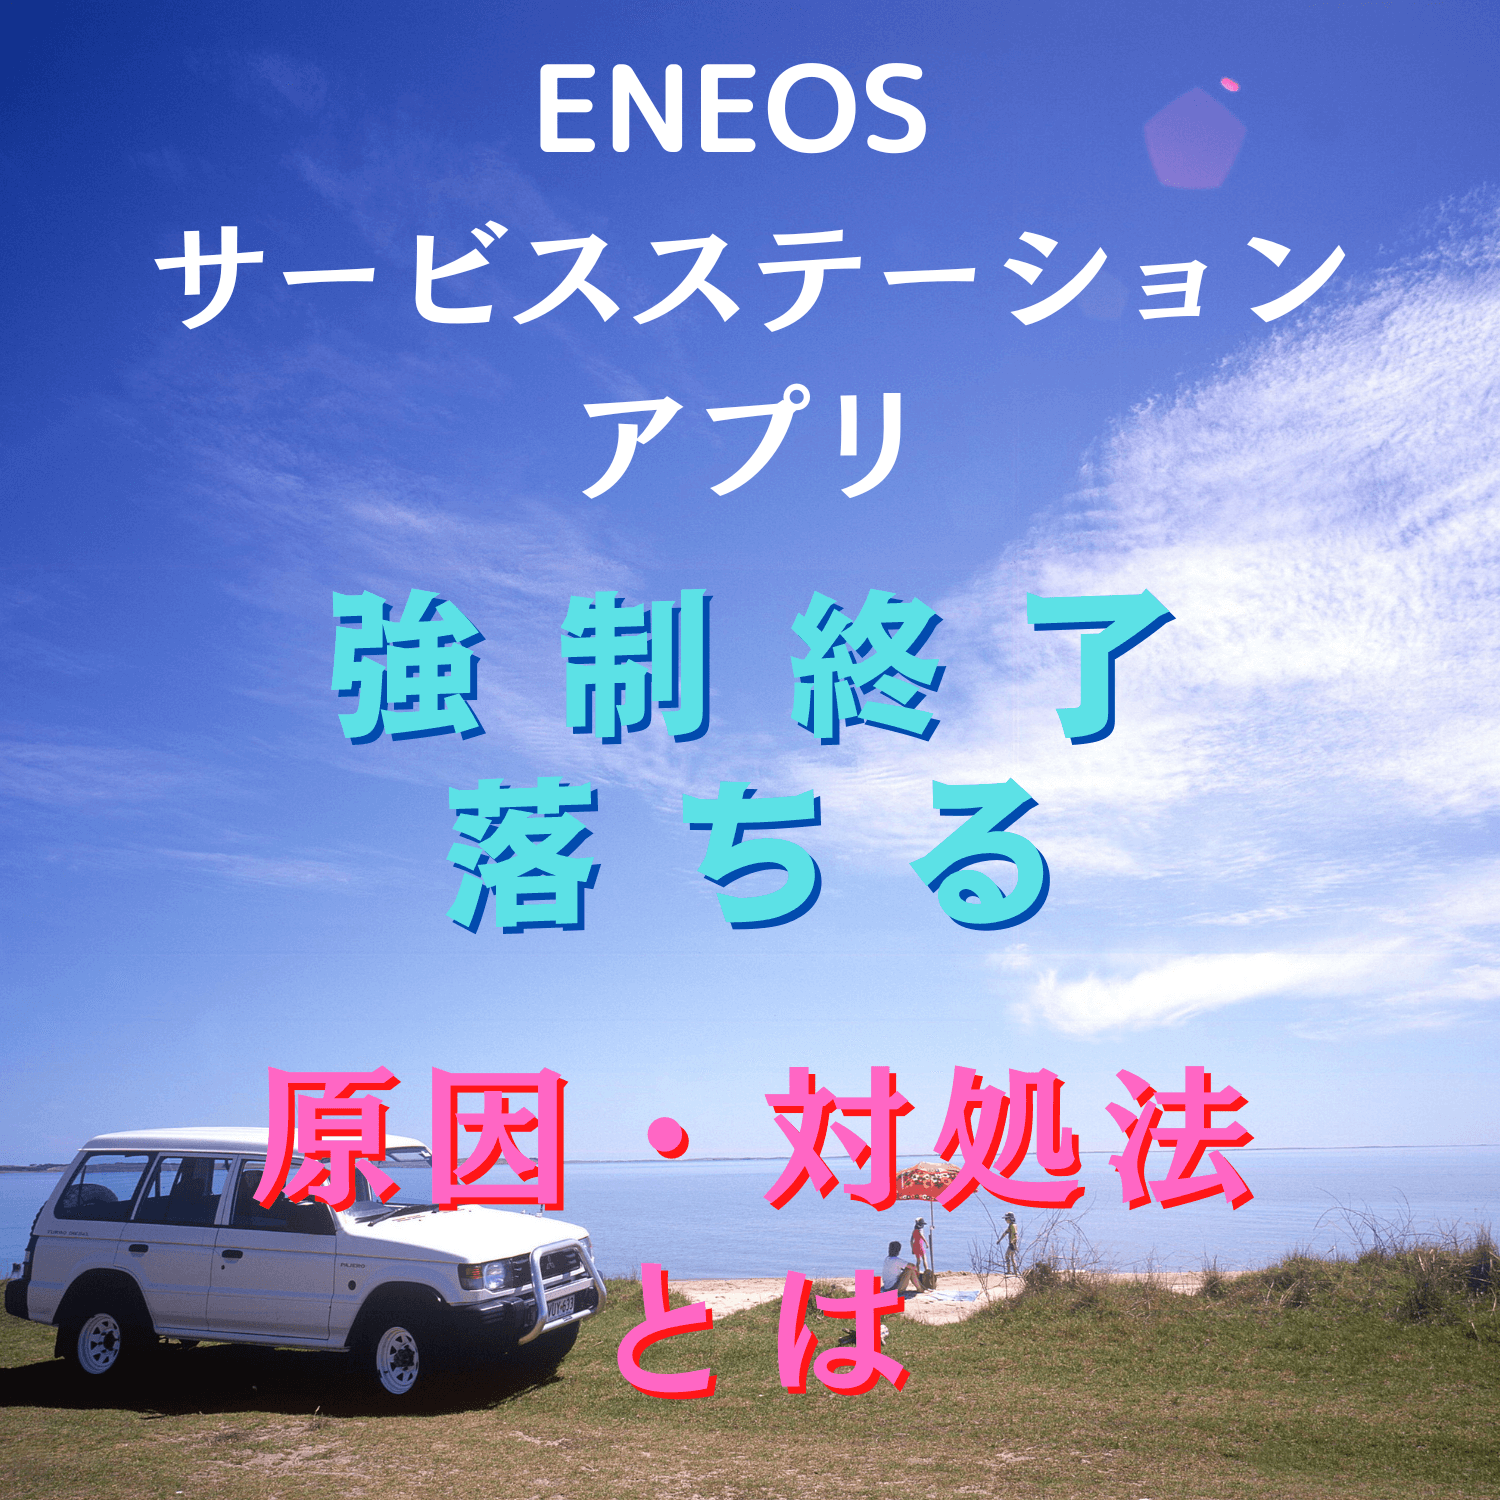 ENEOS サービスステーションアプリ(ENEOS)が強制終了で落ちる原因と対処法とは #ENEOS